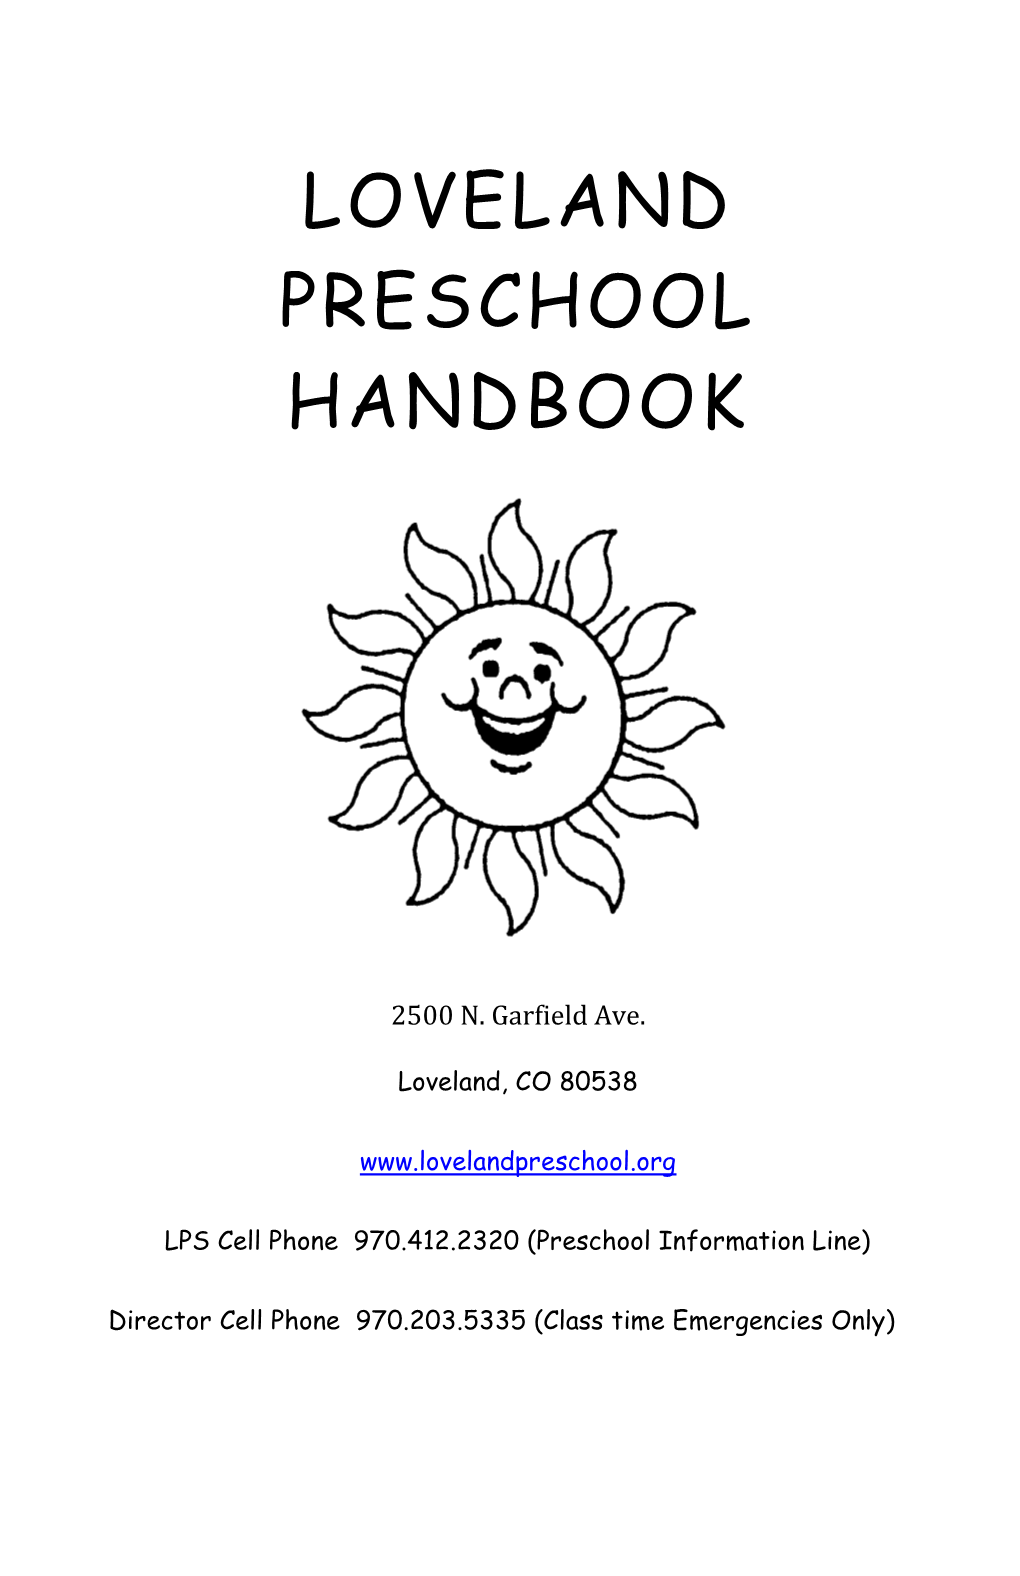 Loveland Preschool Handbook